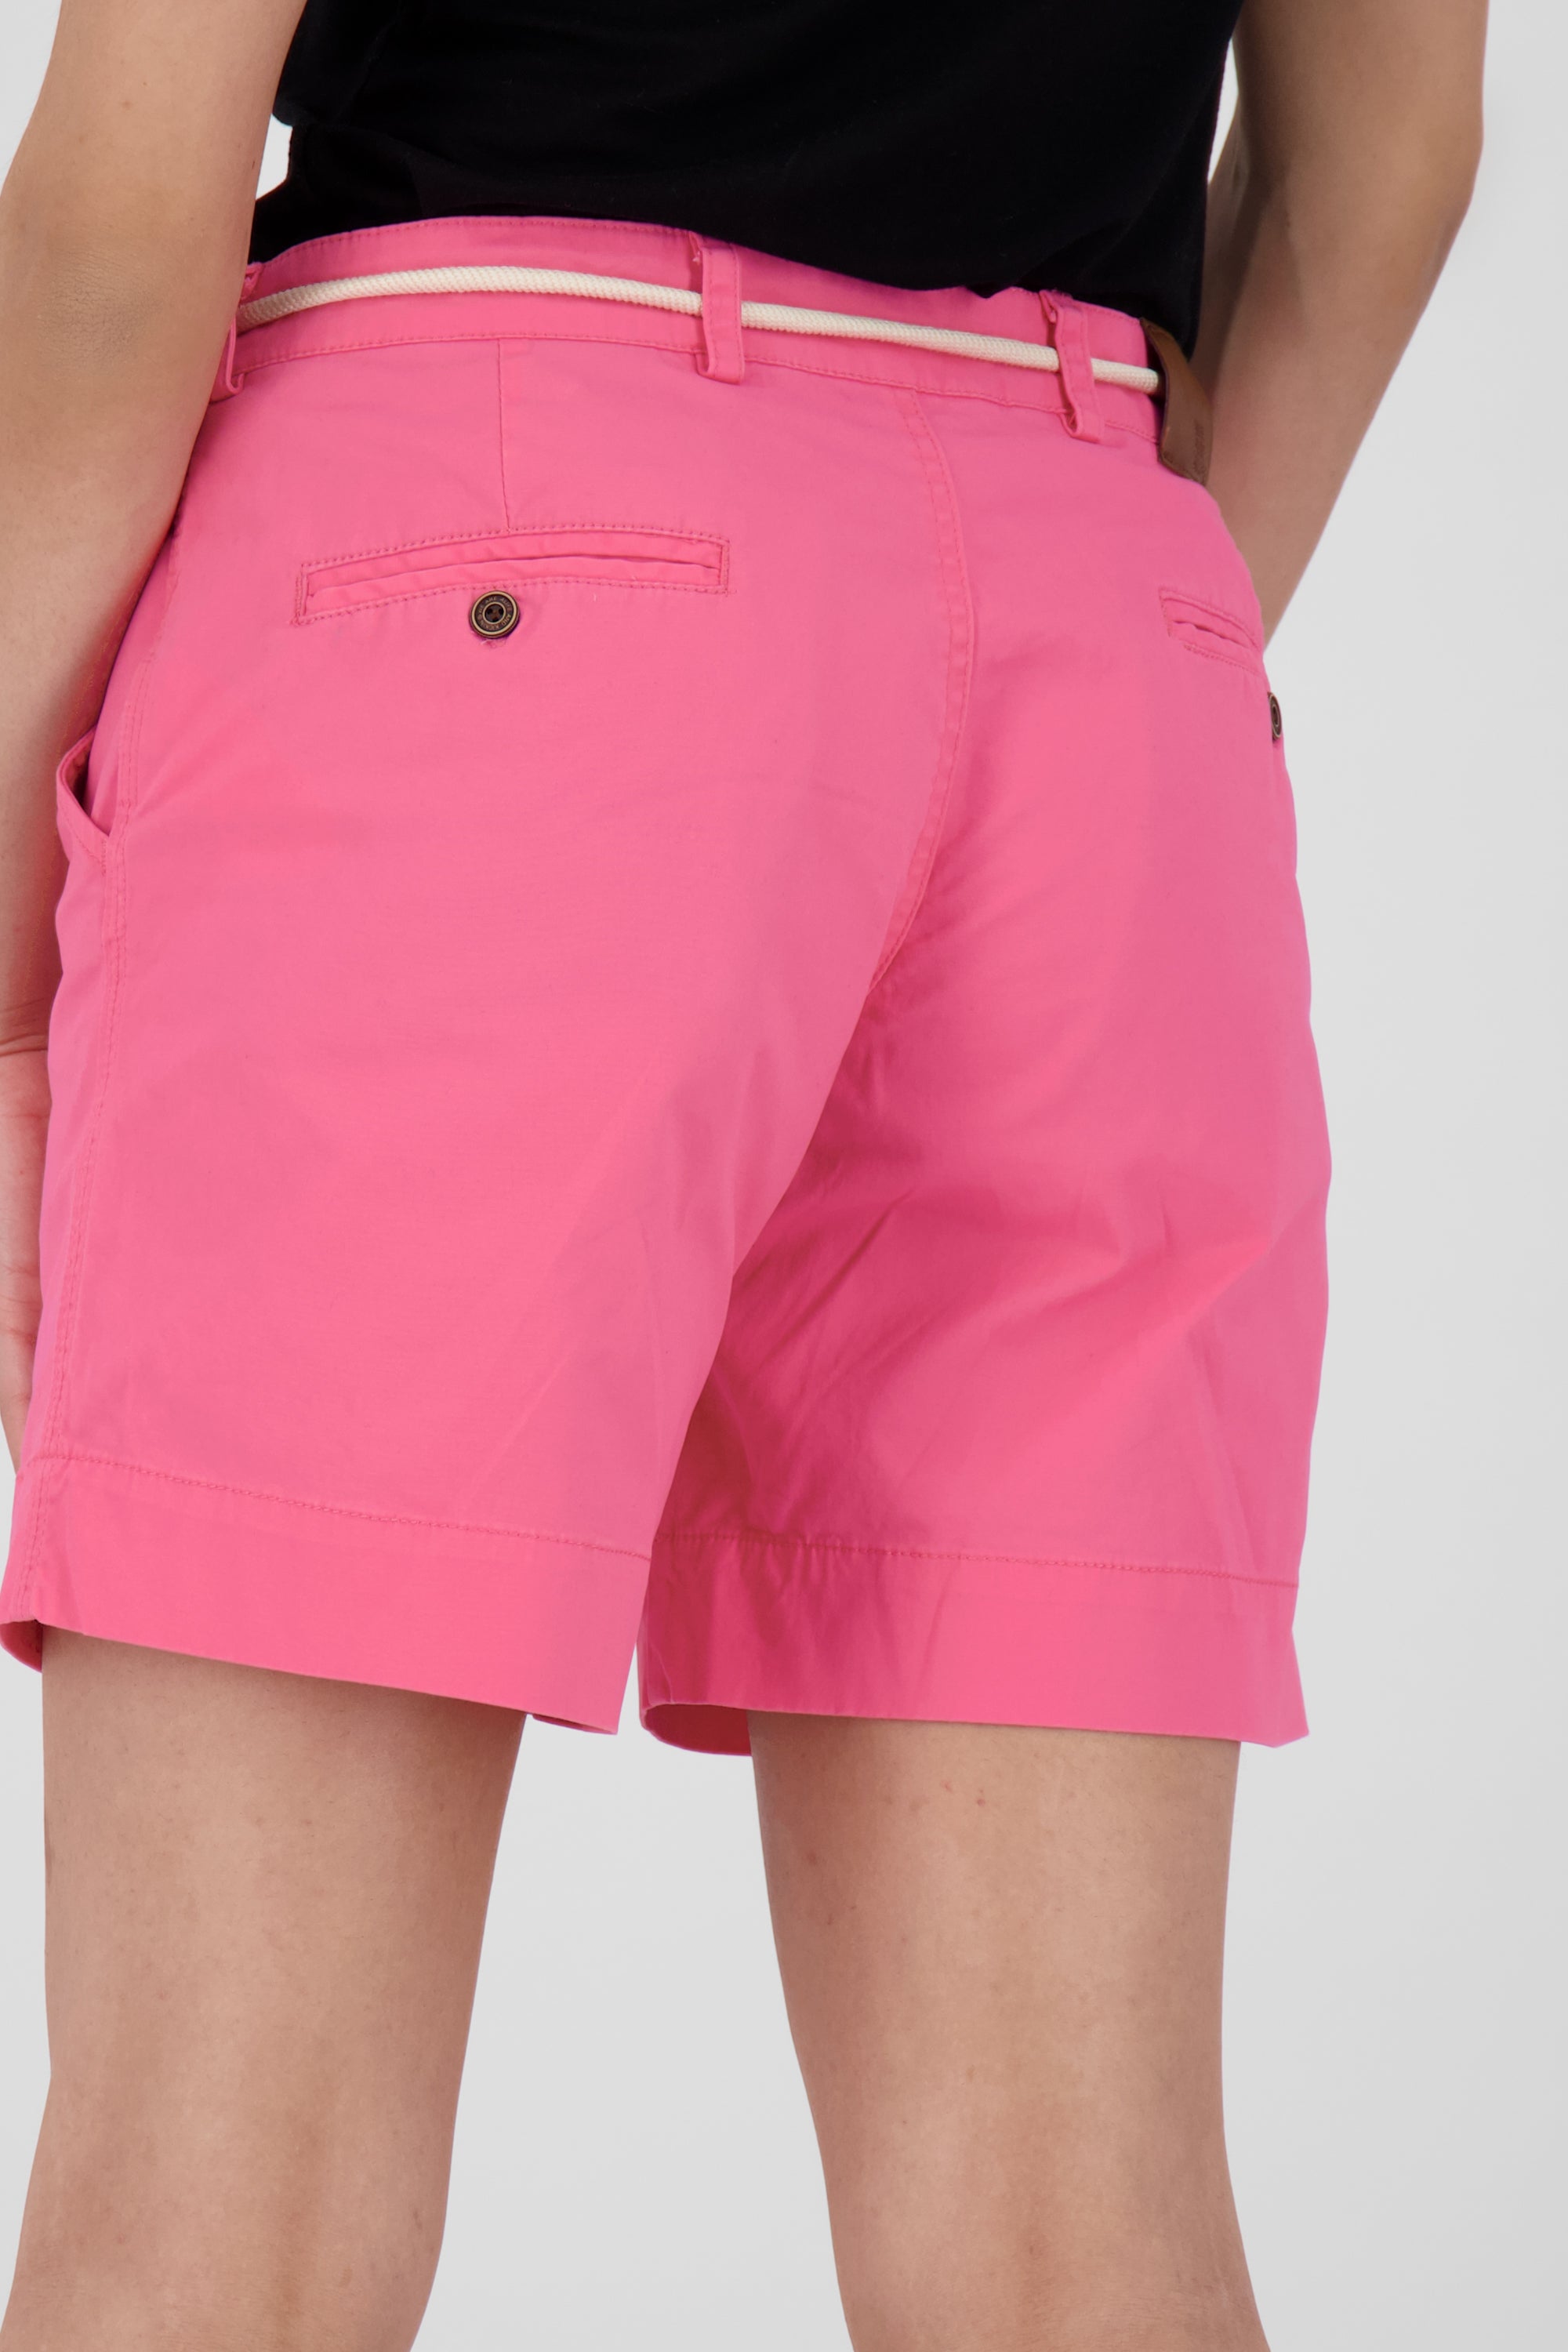 Damen-Shorts JuleAK Long für den perfekten Sommer-Look Pink